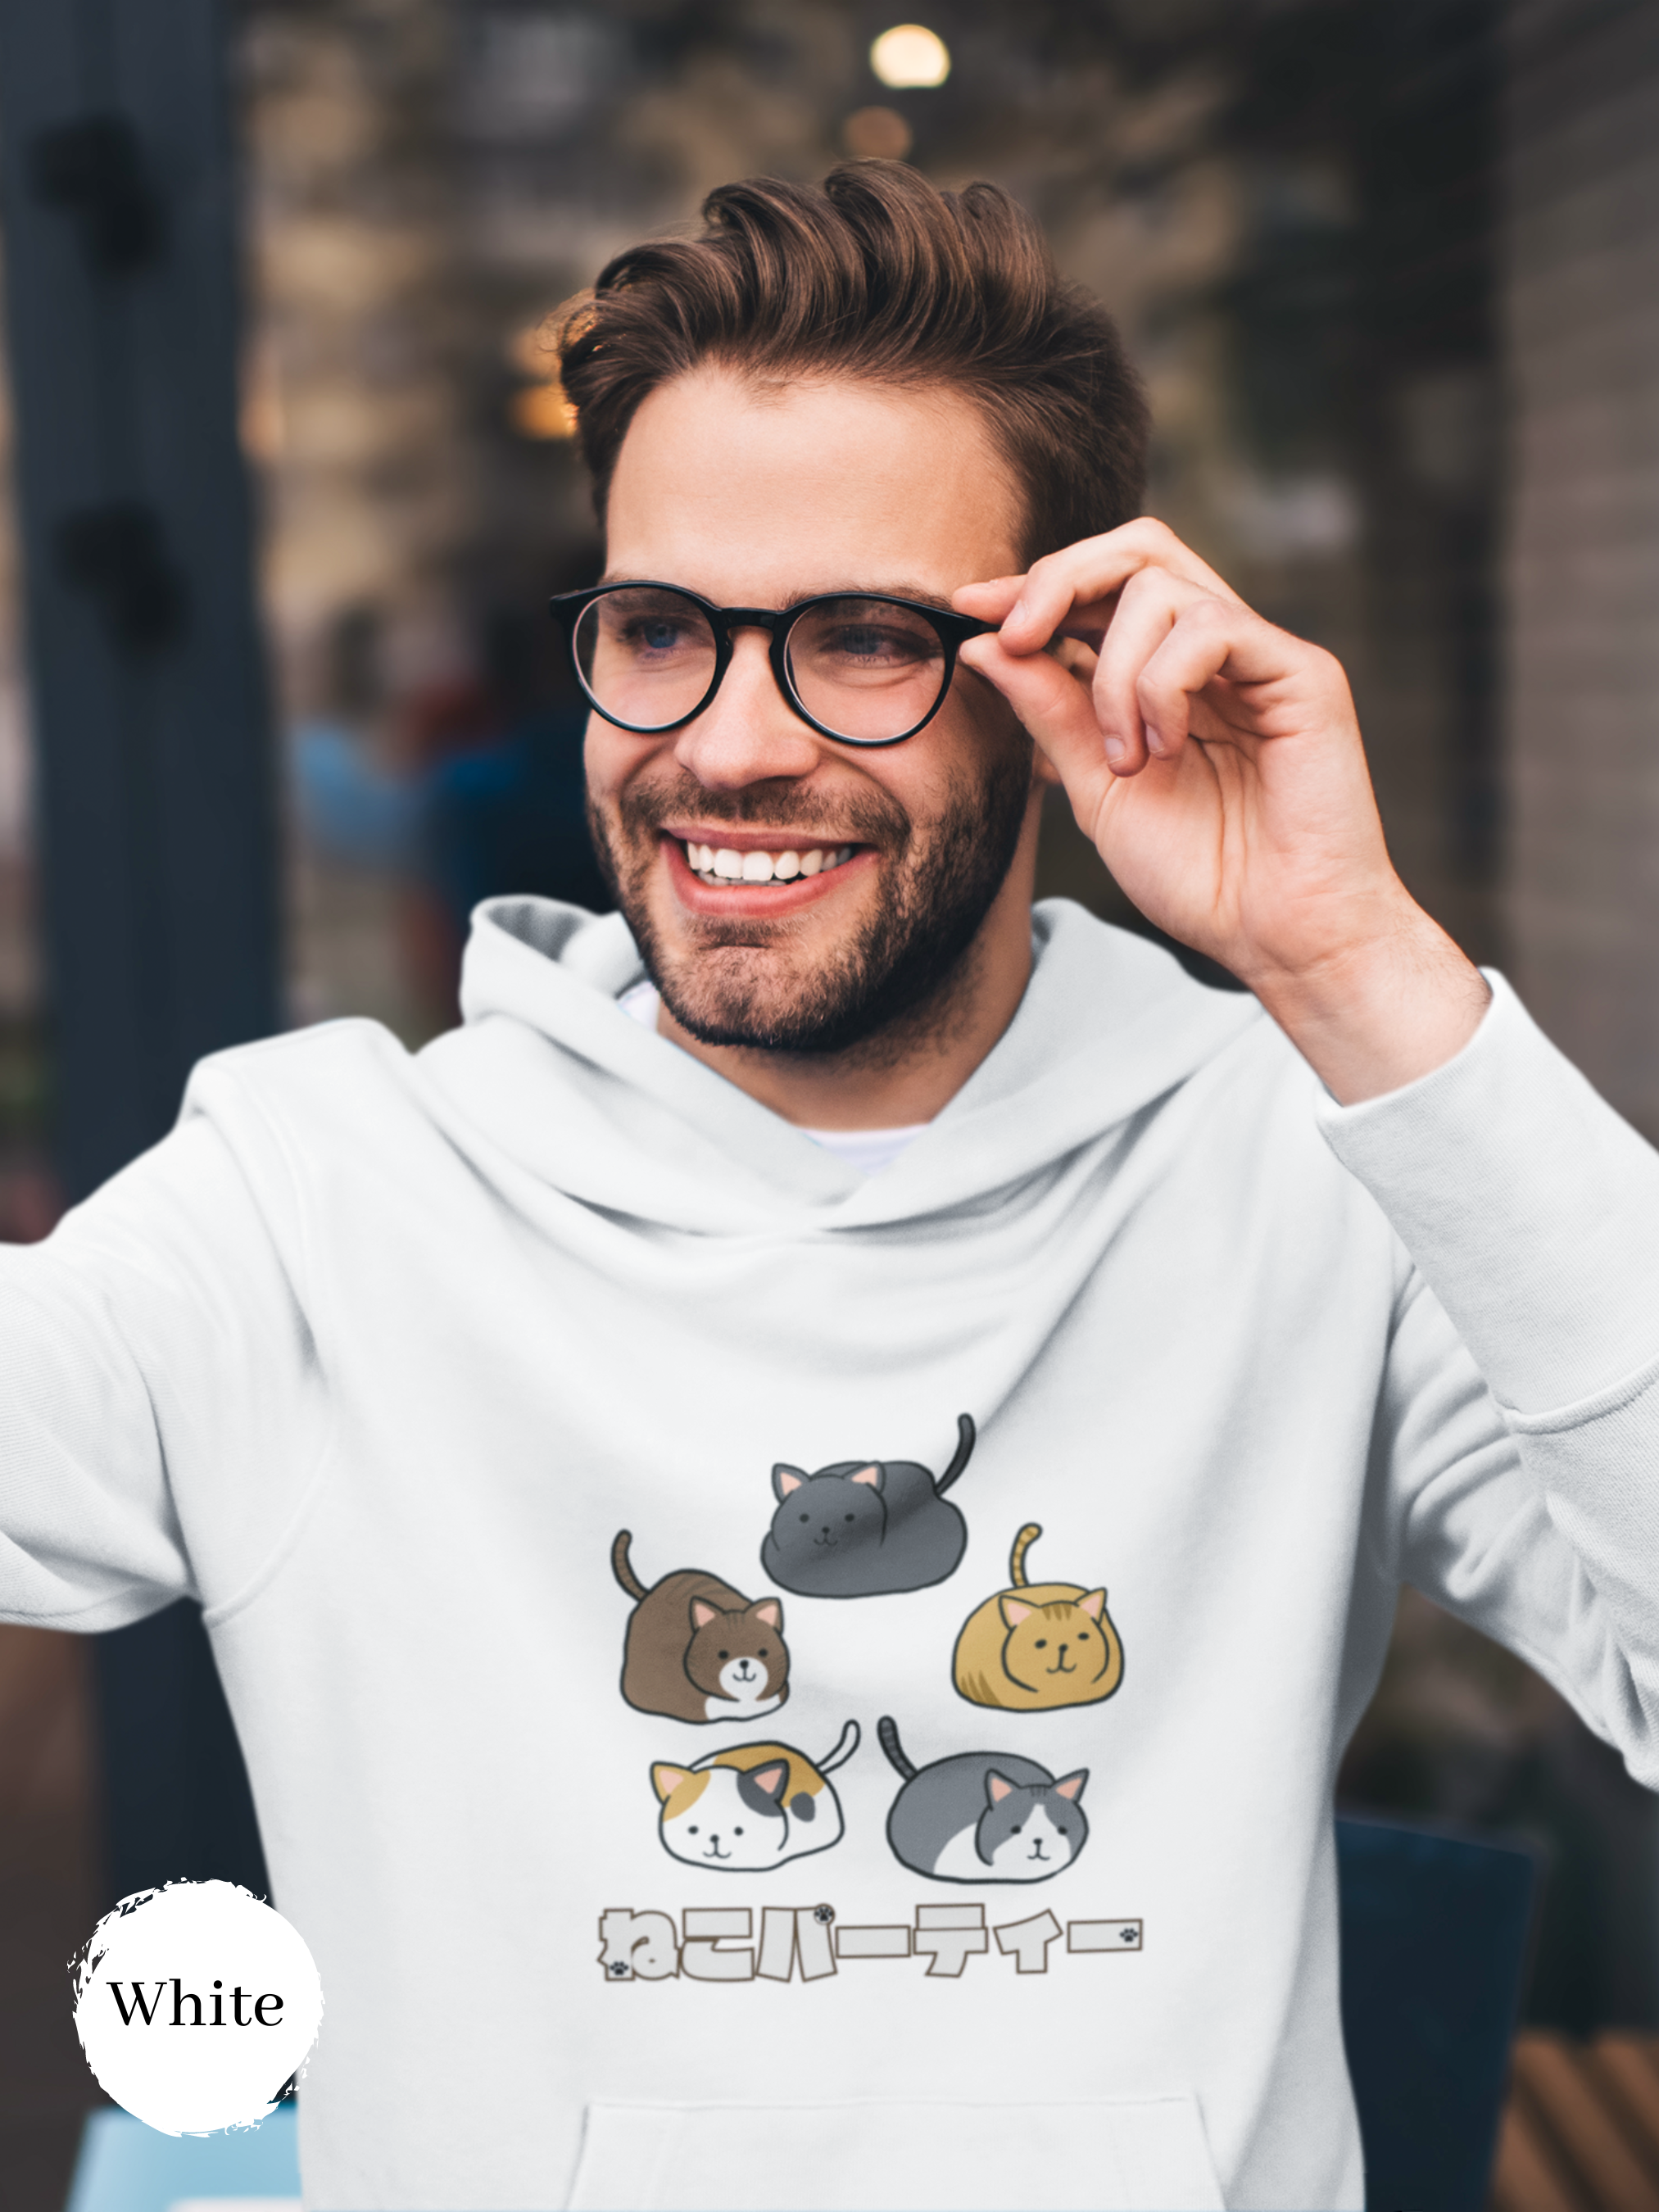 Cat Hoodie: Neko Party Gathering - Adorable Cat Art and Fun Hooded Sweatshirt Design